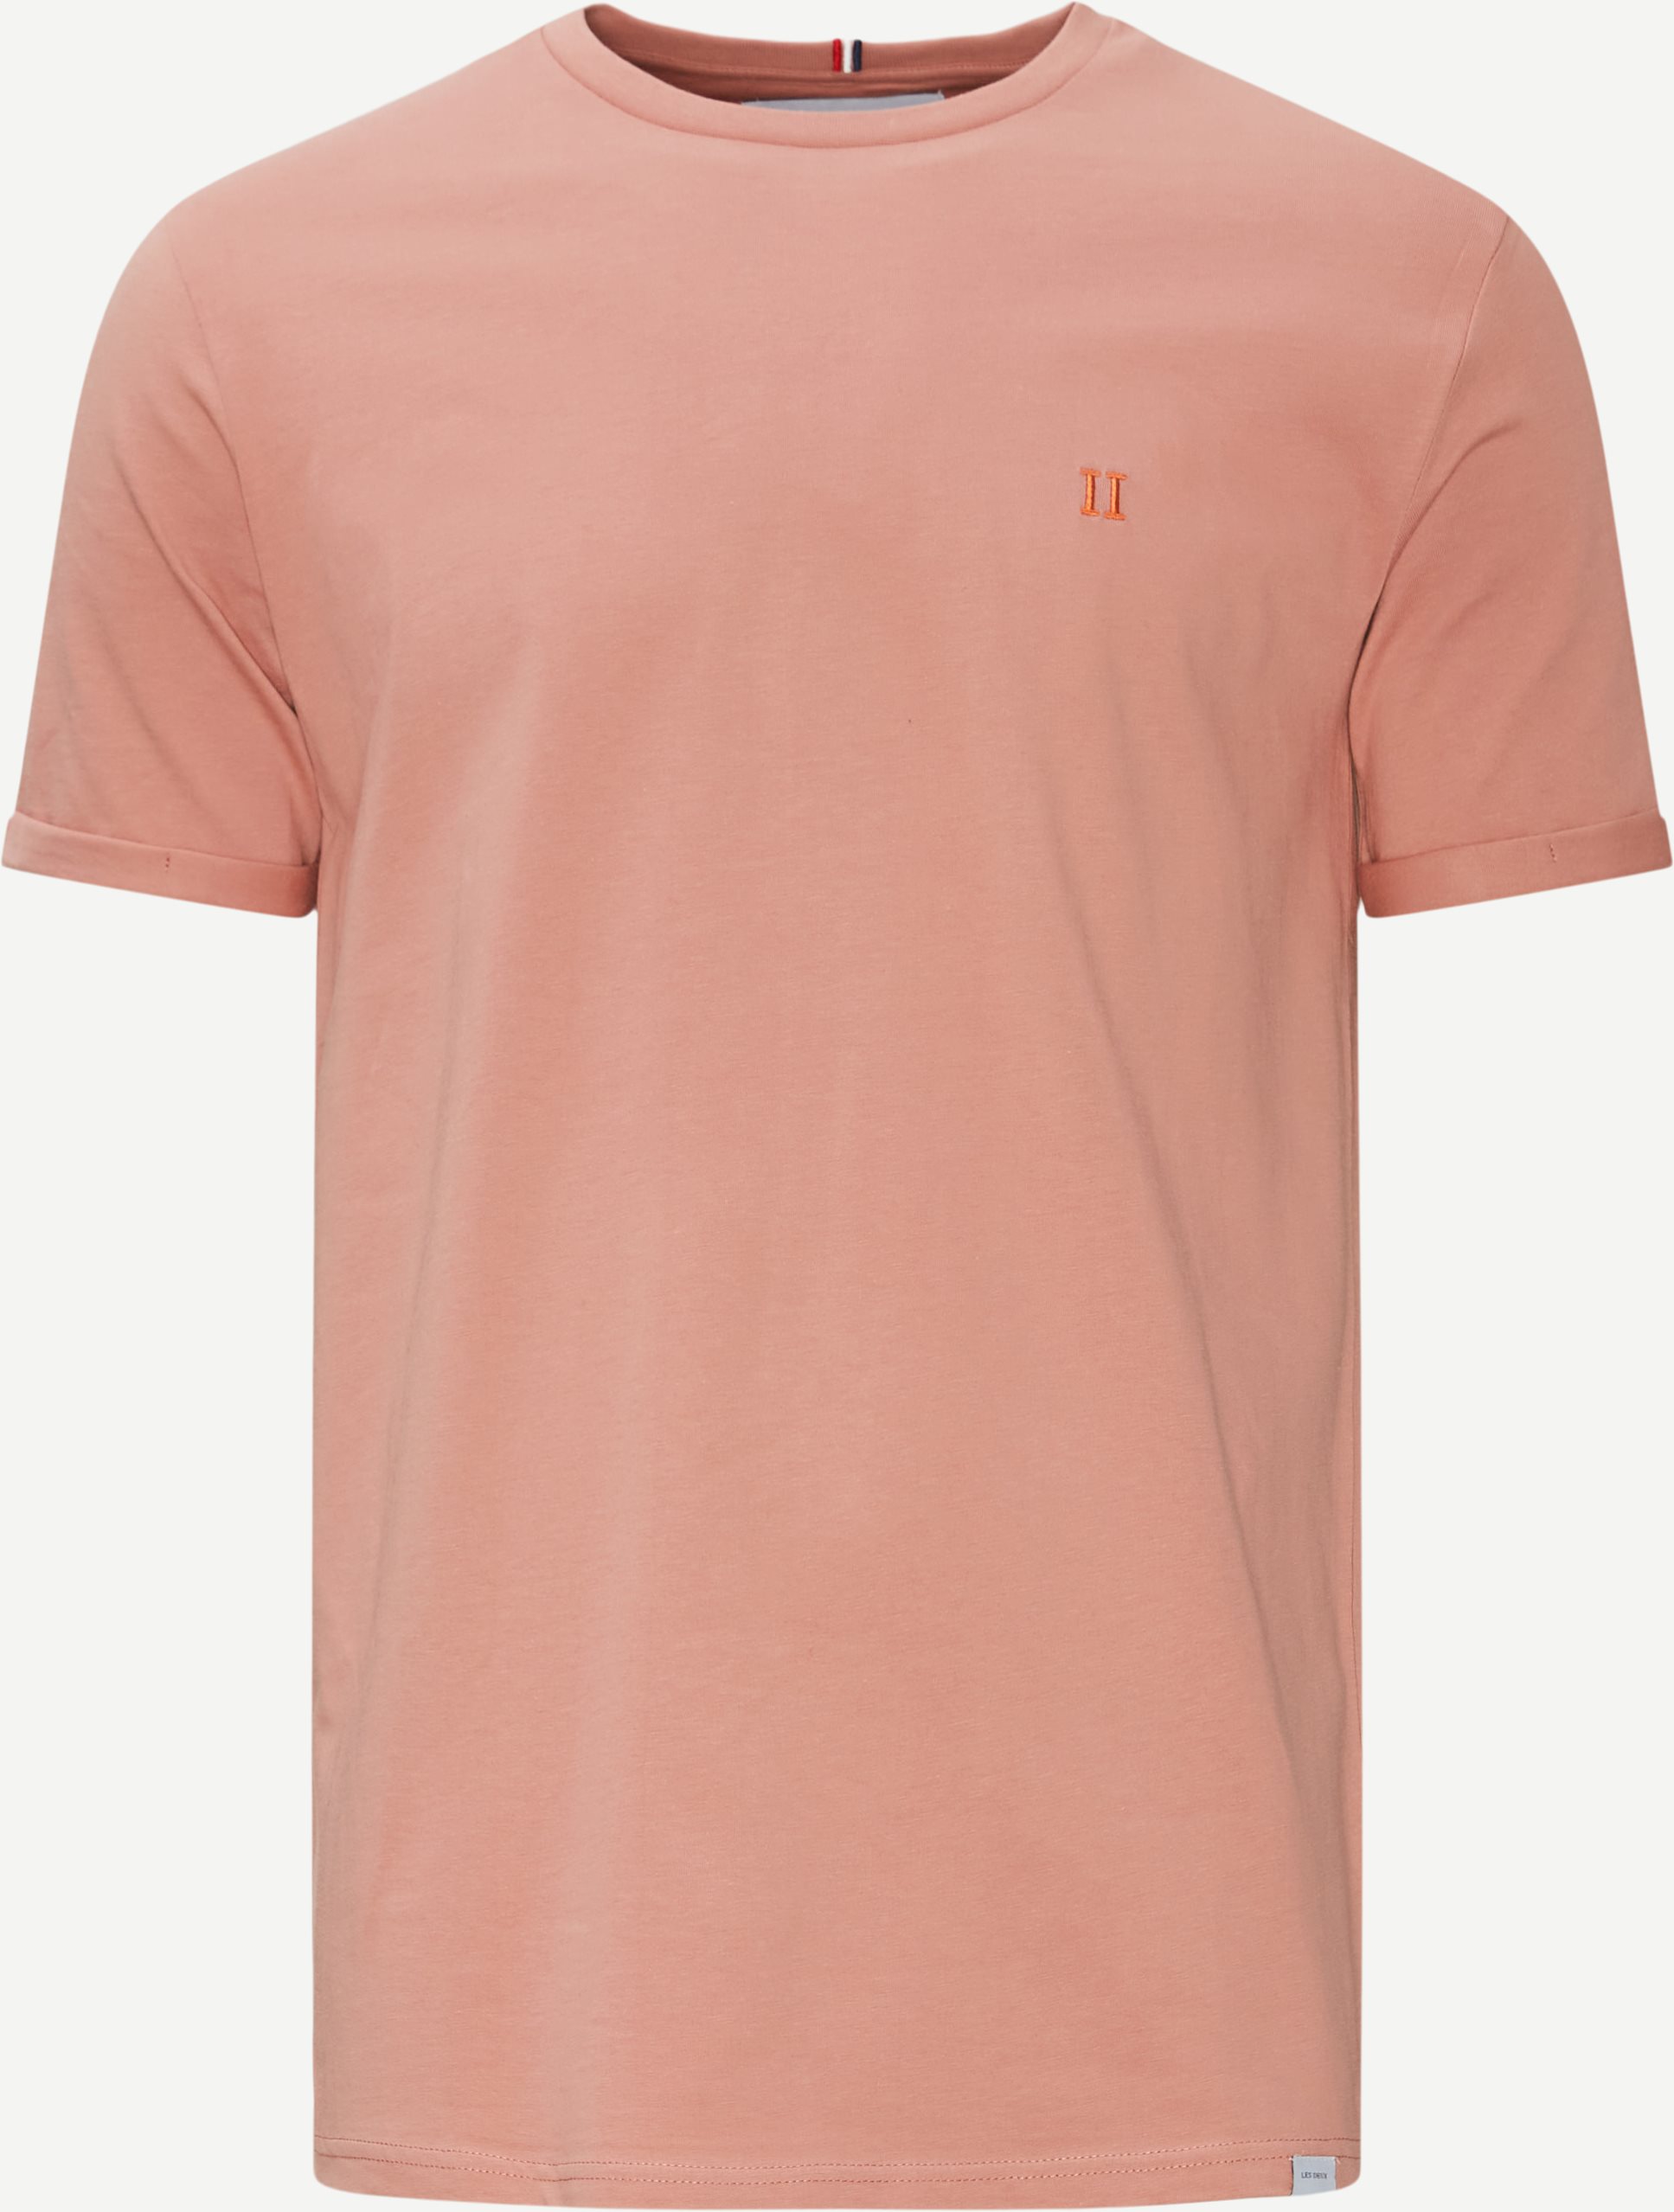 Nørregaard T-shirt - T-shirts - Regular fit - Rosa